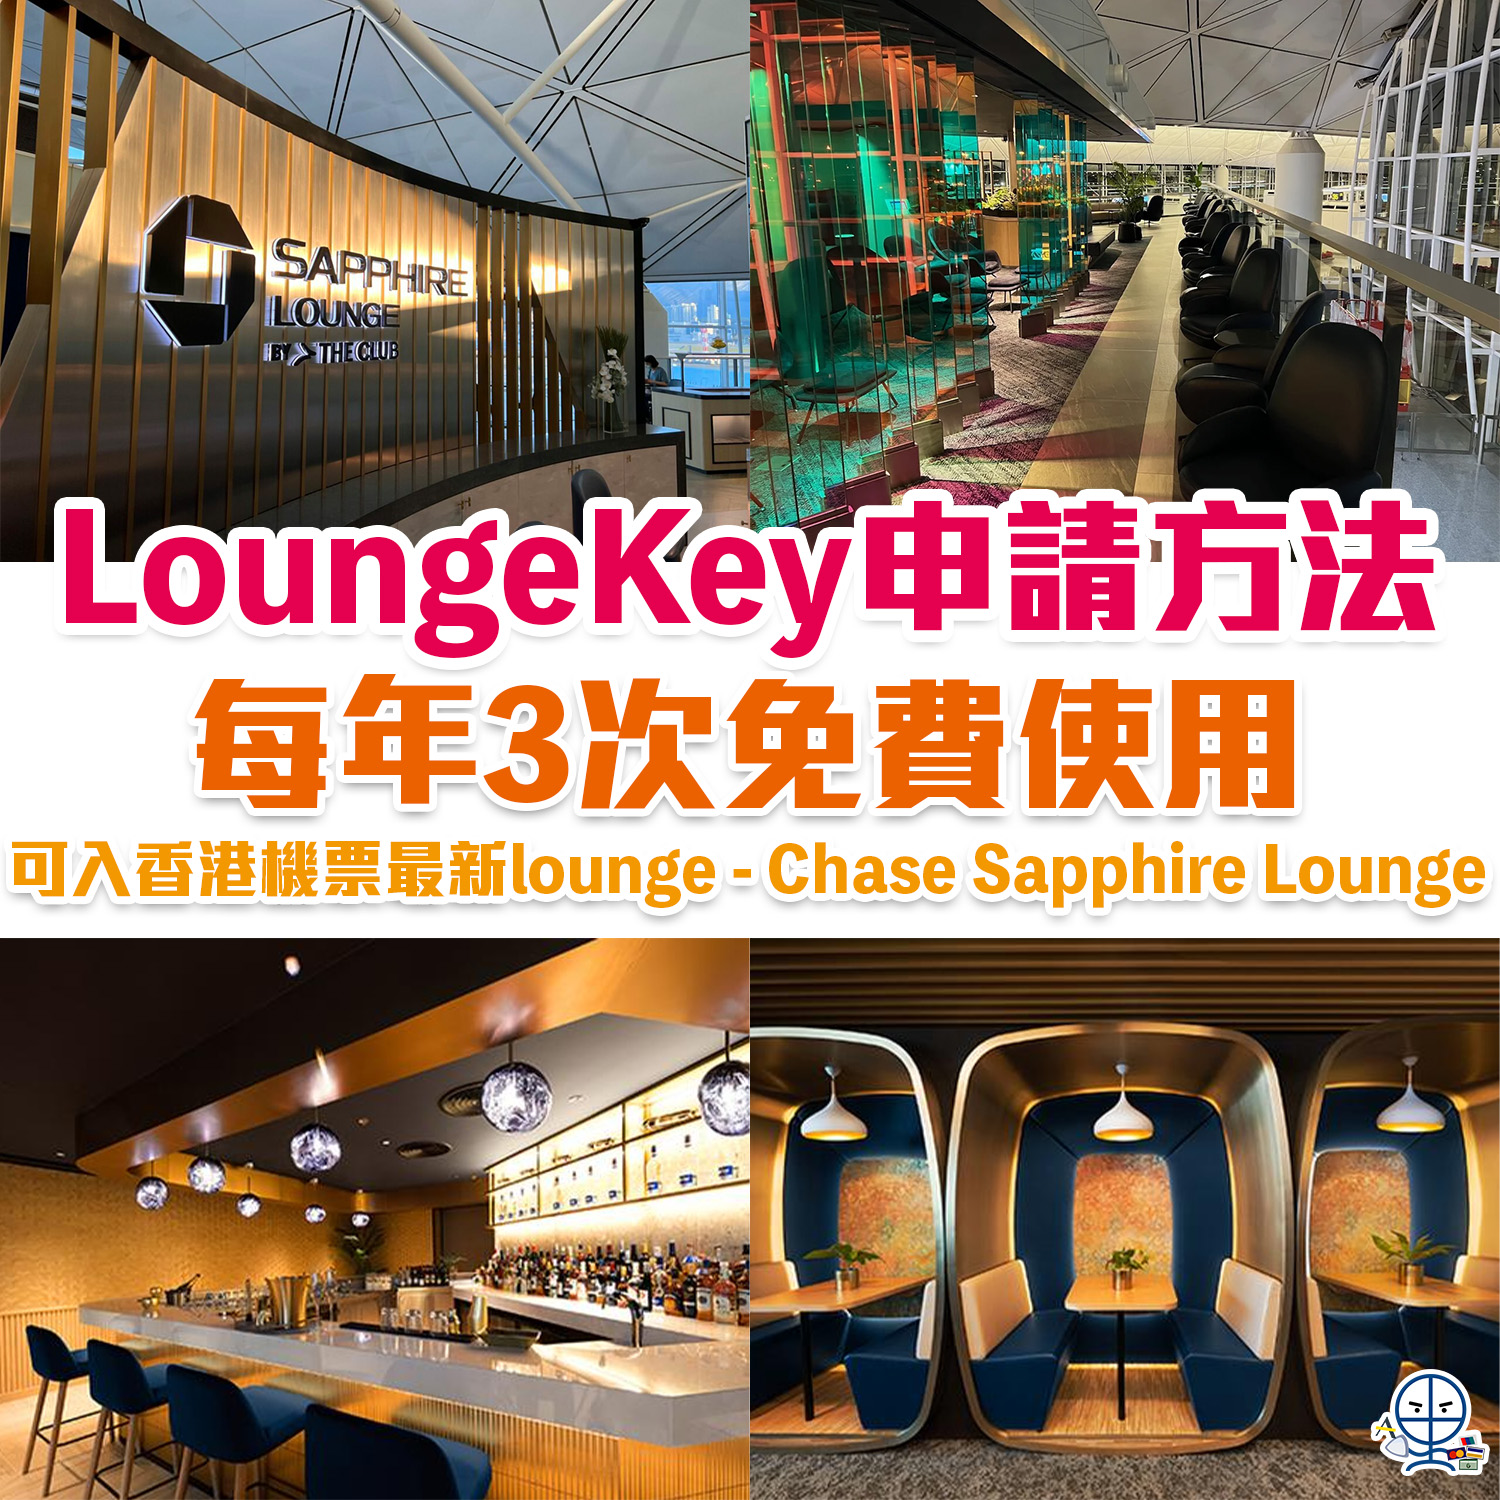 【LoungeKey】免費使用機場貴賓室！銀聯卡可申請LoungeKey